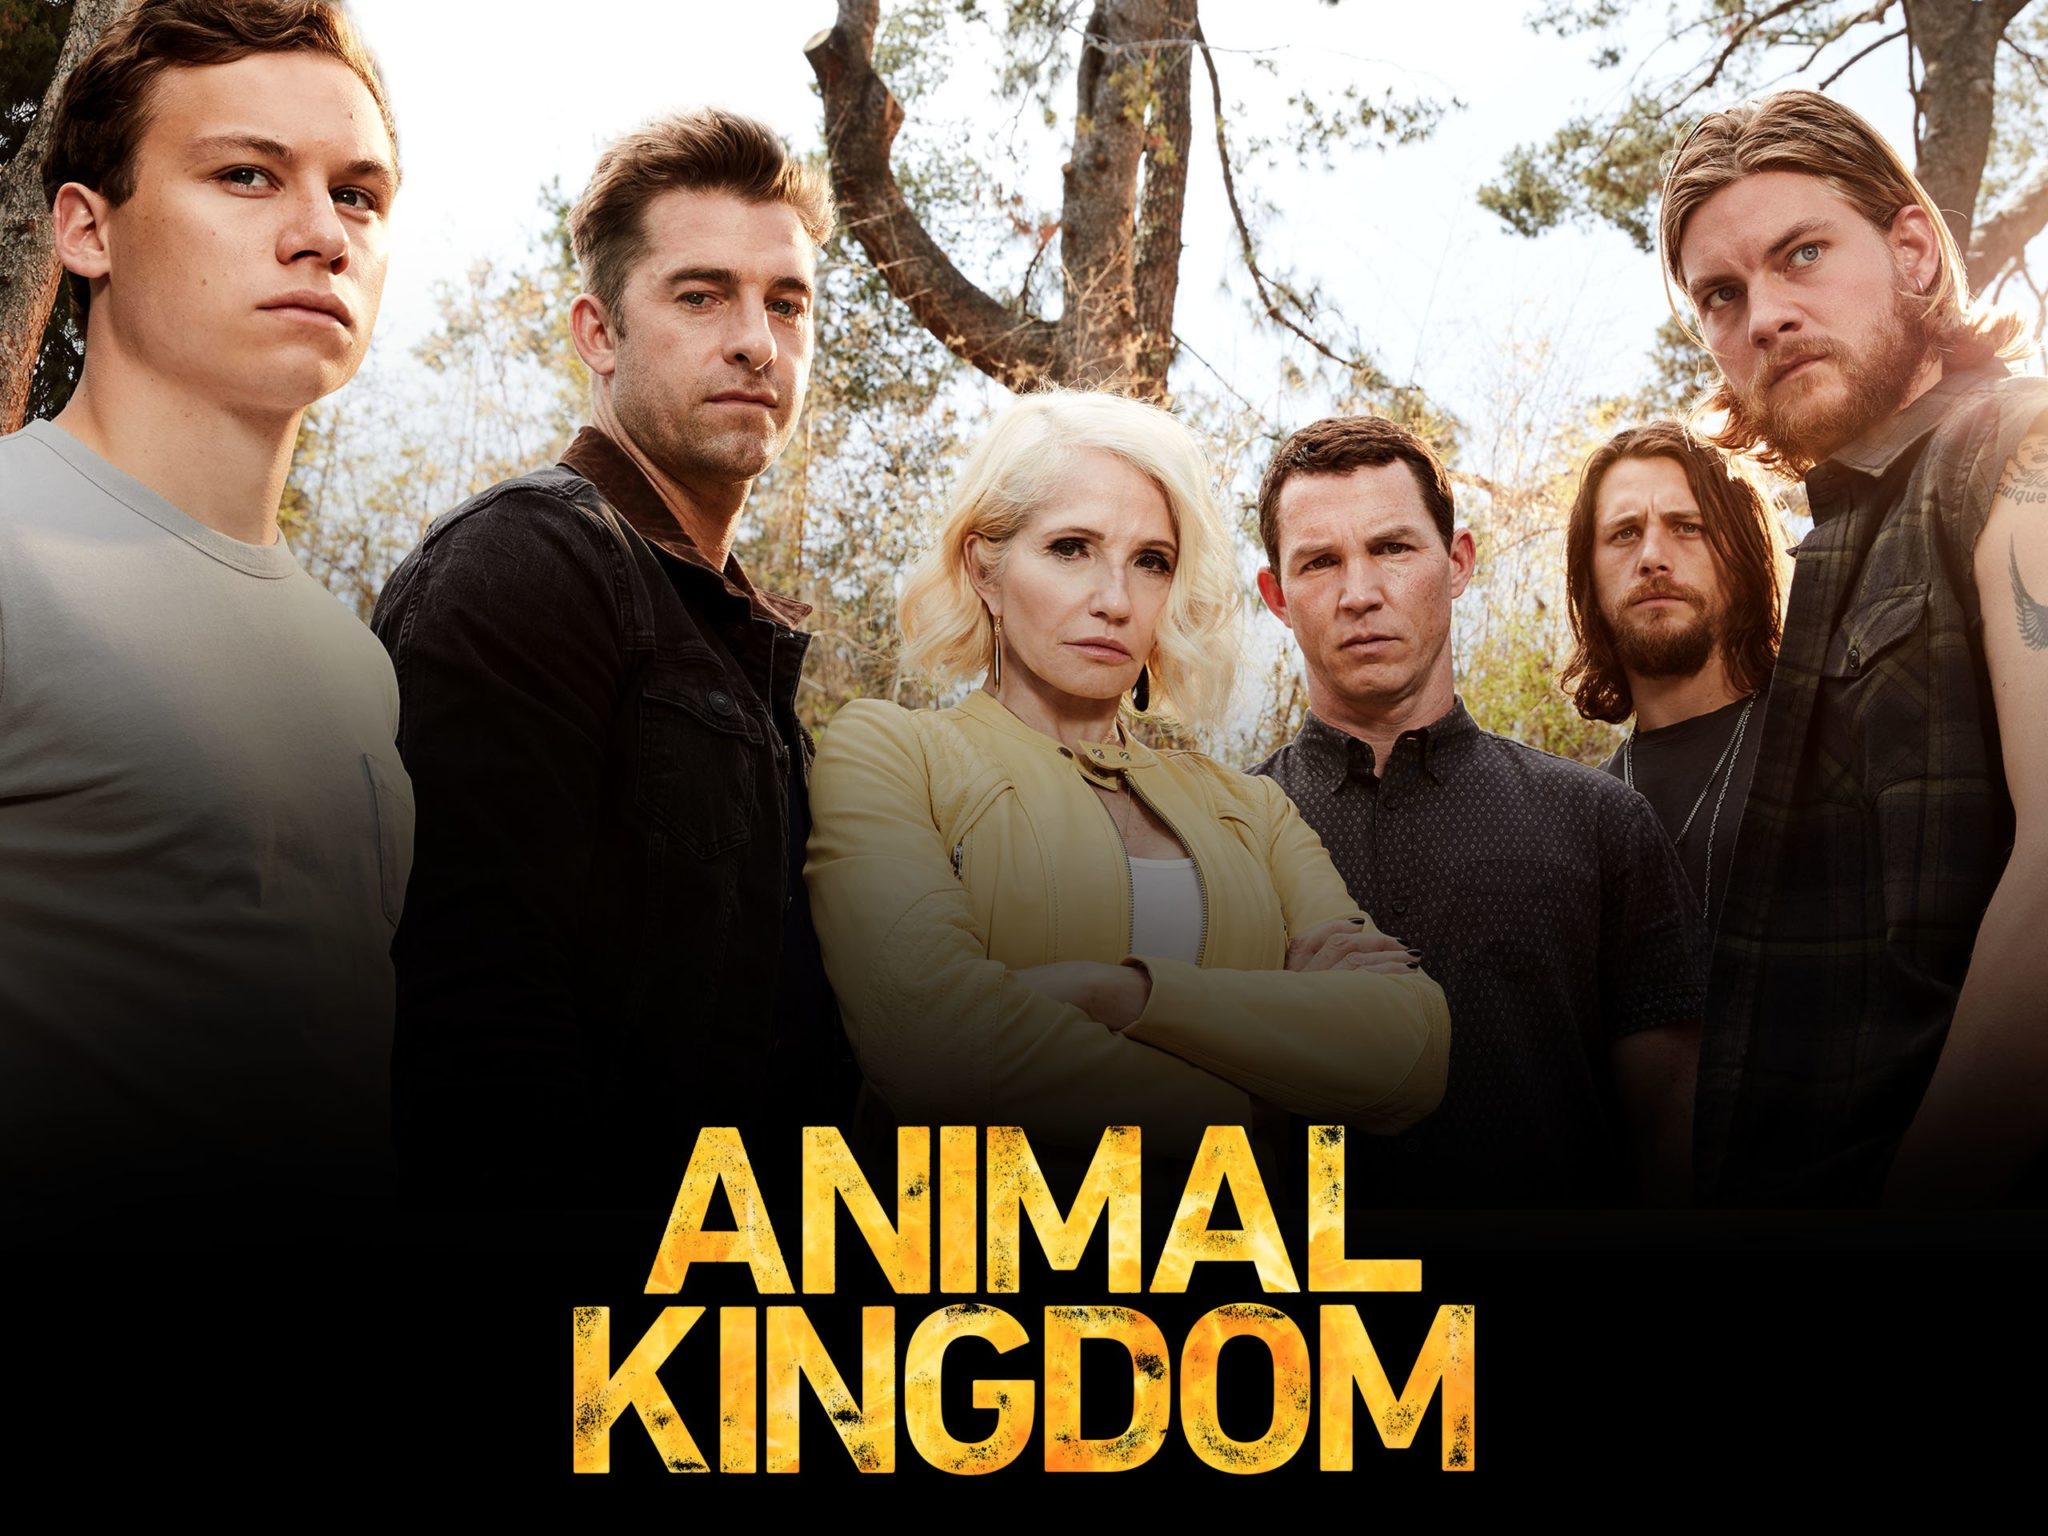 "Animal Kingdom" Season 1 To 5 Available On Netflix? Where to Watch